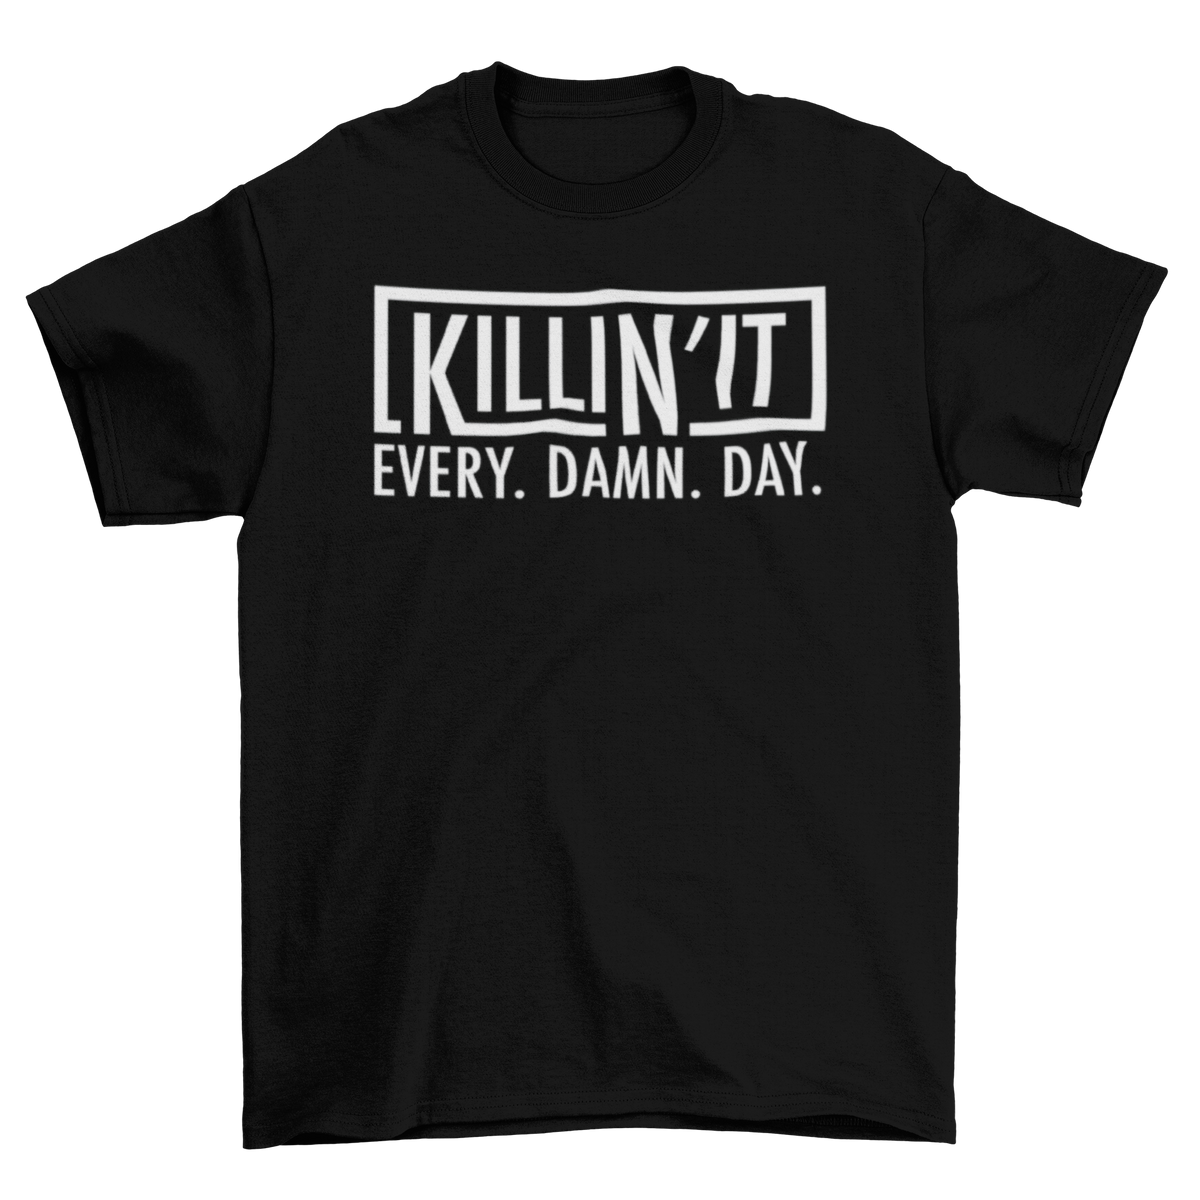 Killing it every day - T-shirt Unisex